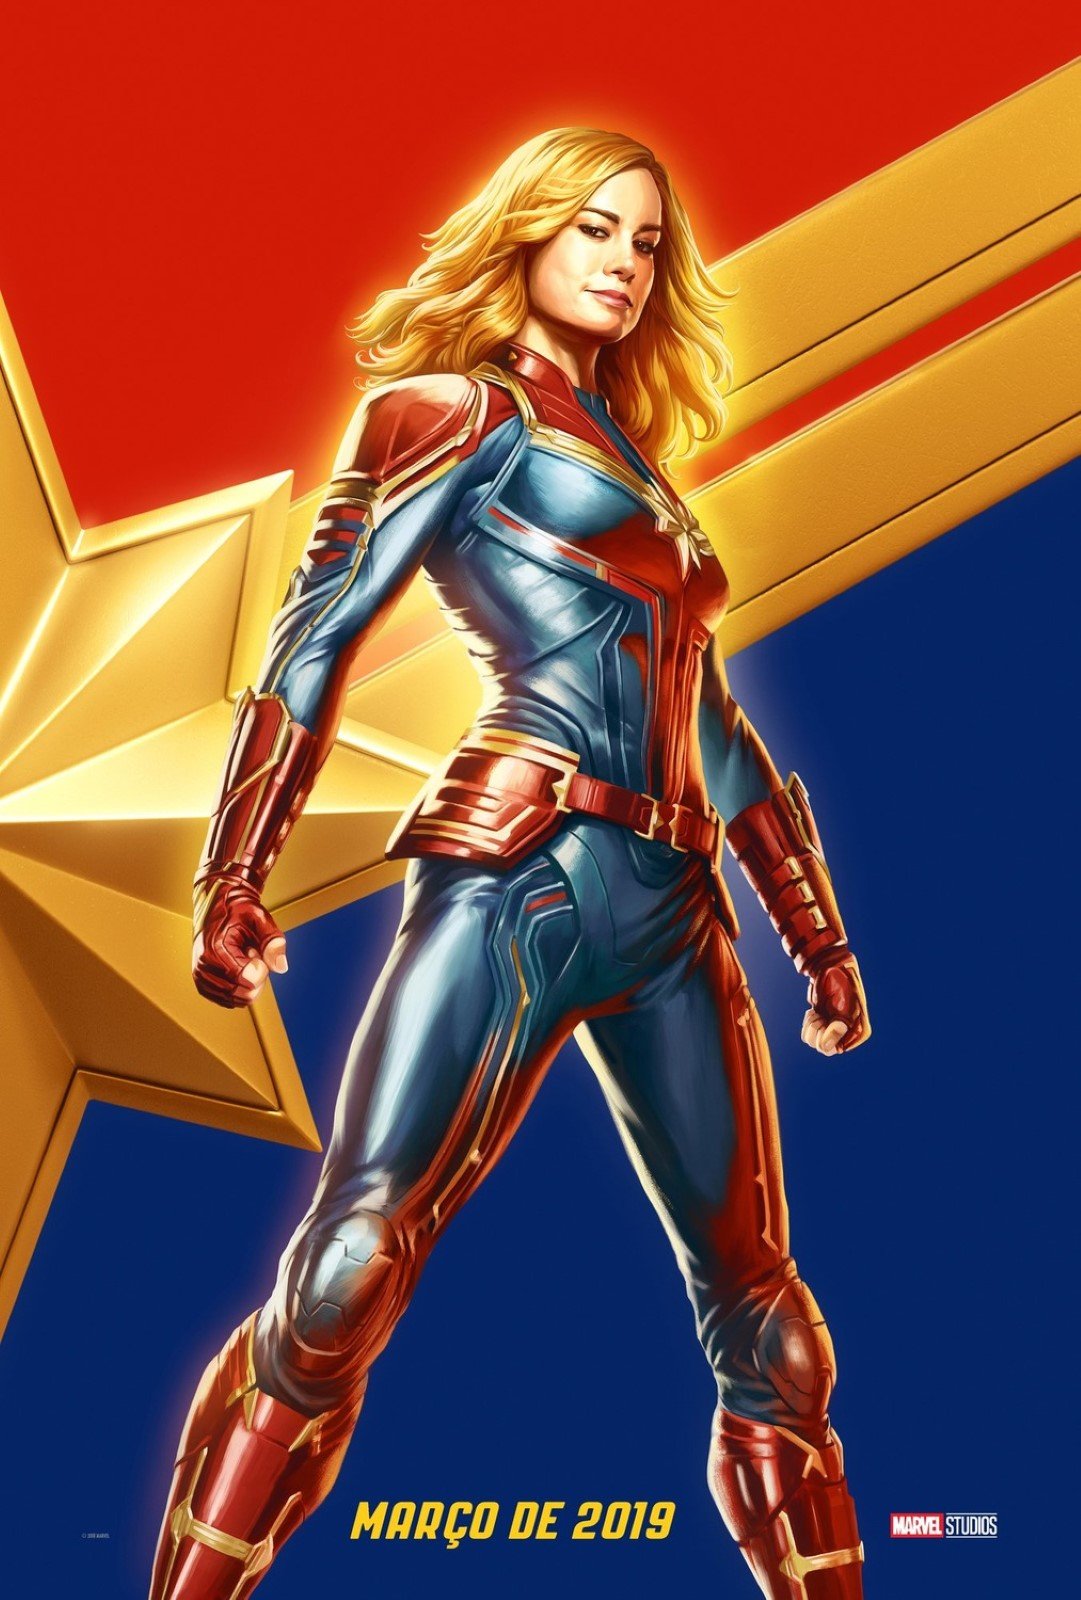 Capitã Marvel - Filme 2019 - AdoroCinema, endgame o chamado filme